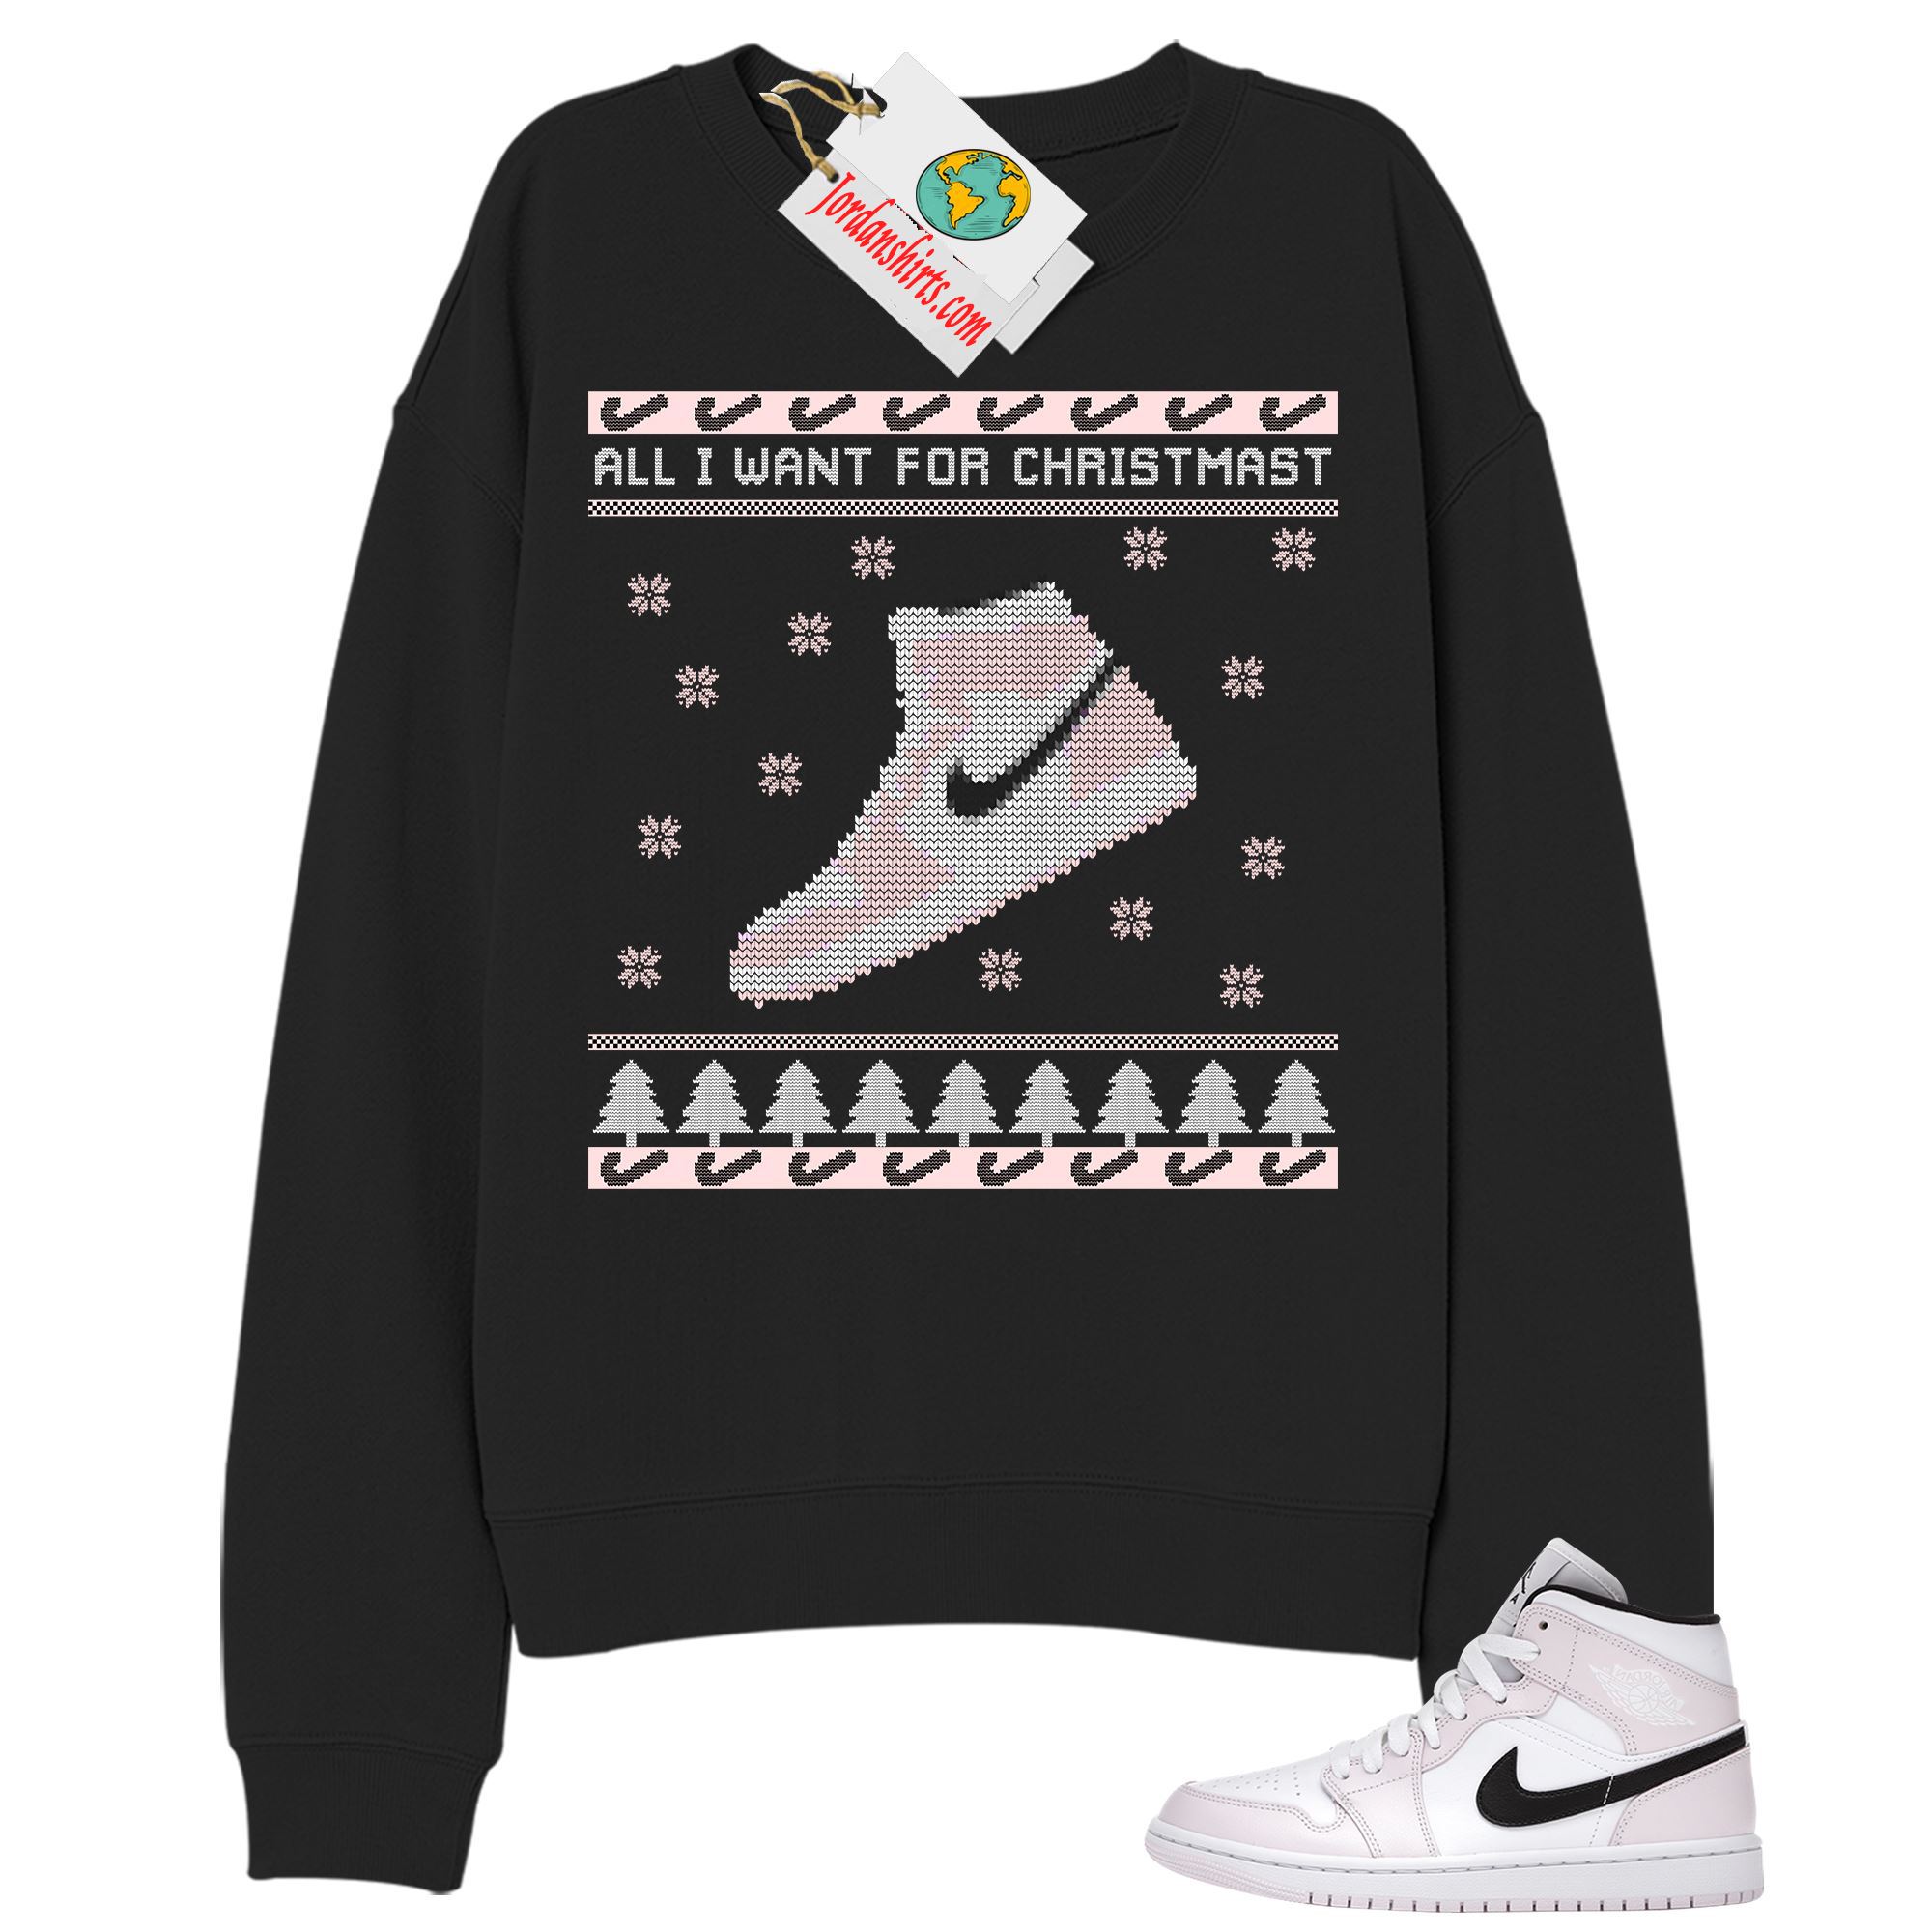 Jordan 1 Sweatshirt, Sneaker Ugly Christmas Shirt Black Sweatshirt Air Jordan 1 Barely Rose 1s Size Up To 5xl